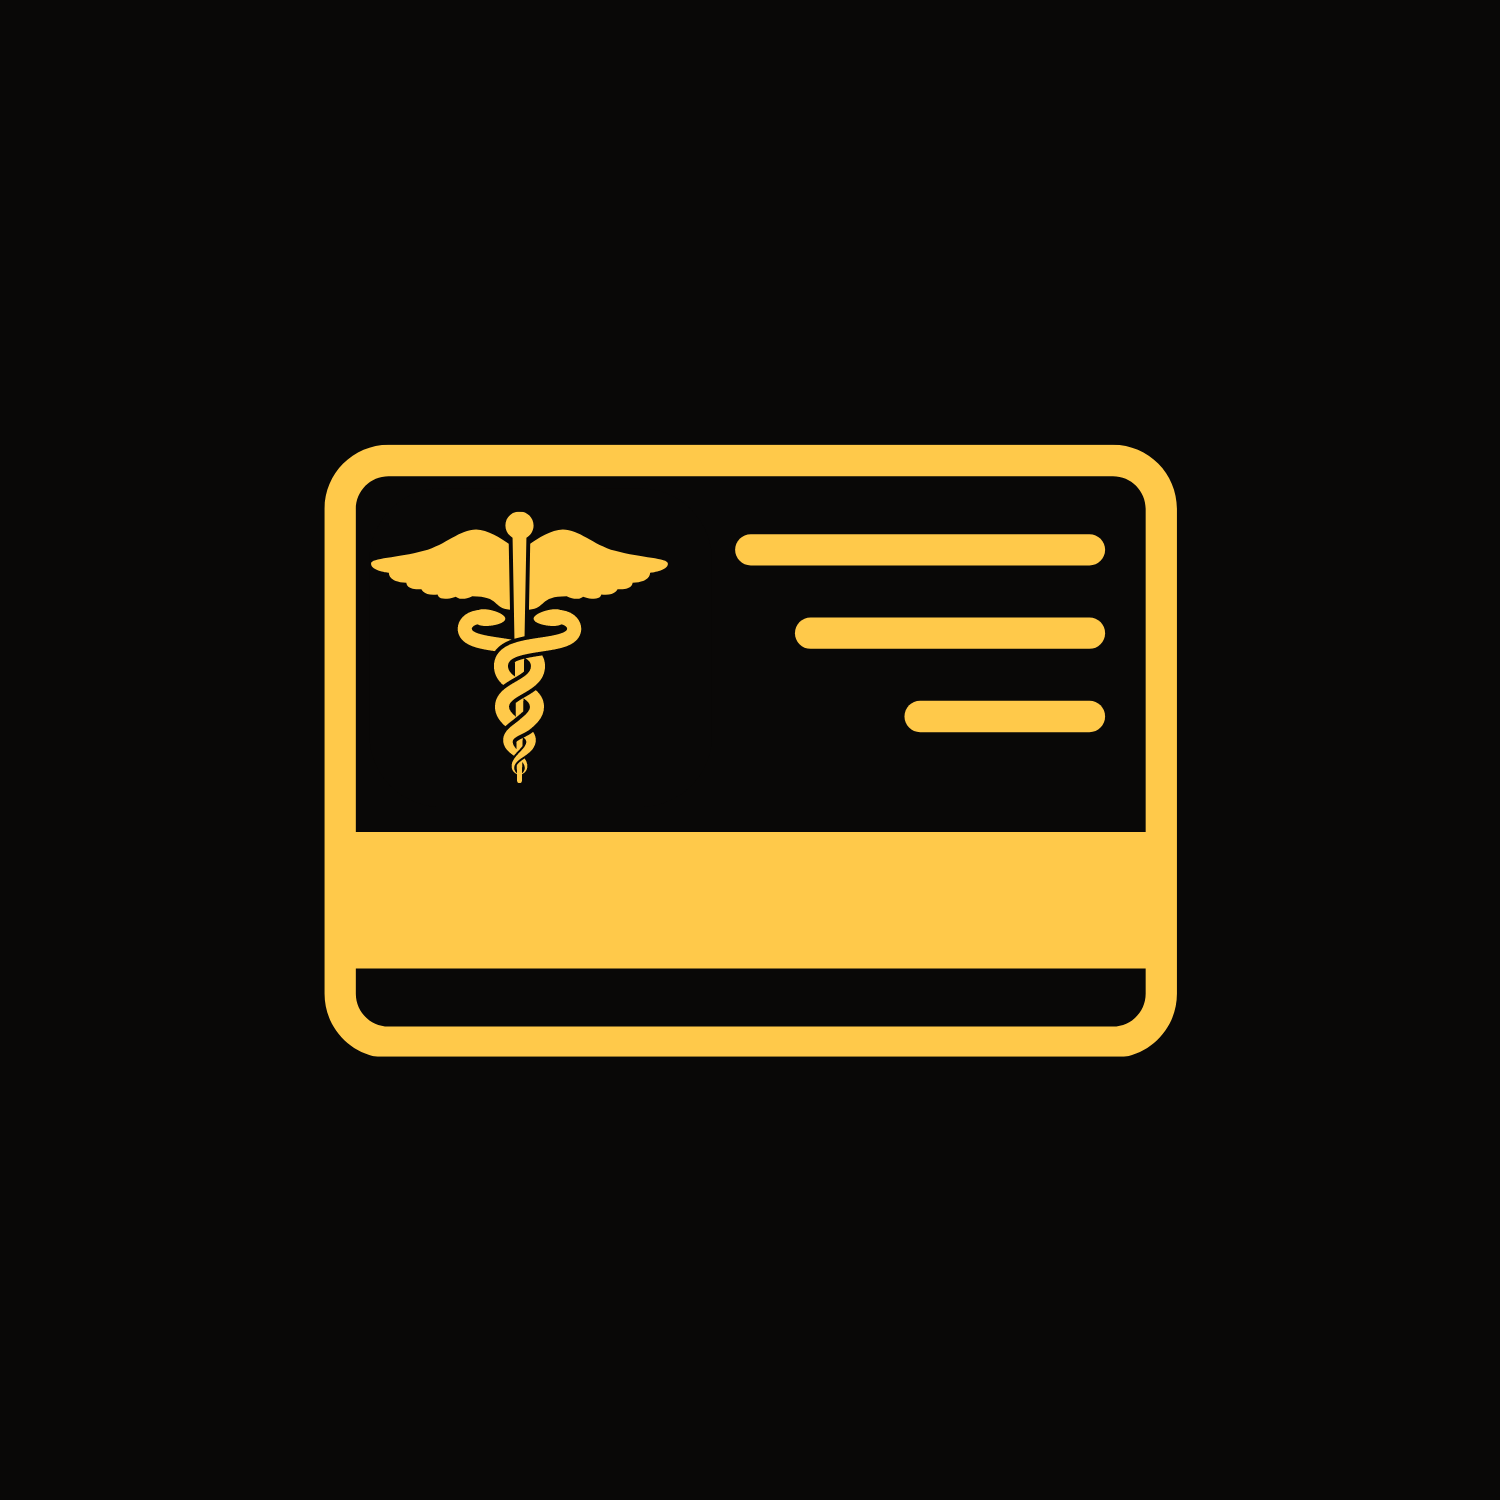 A Medicaid Member Card